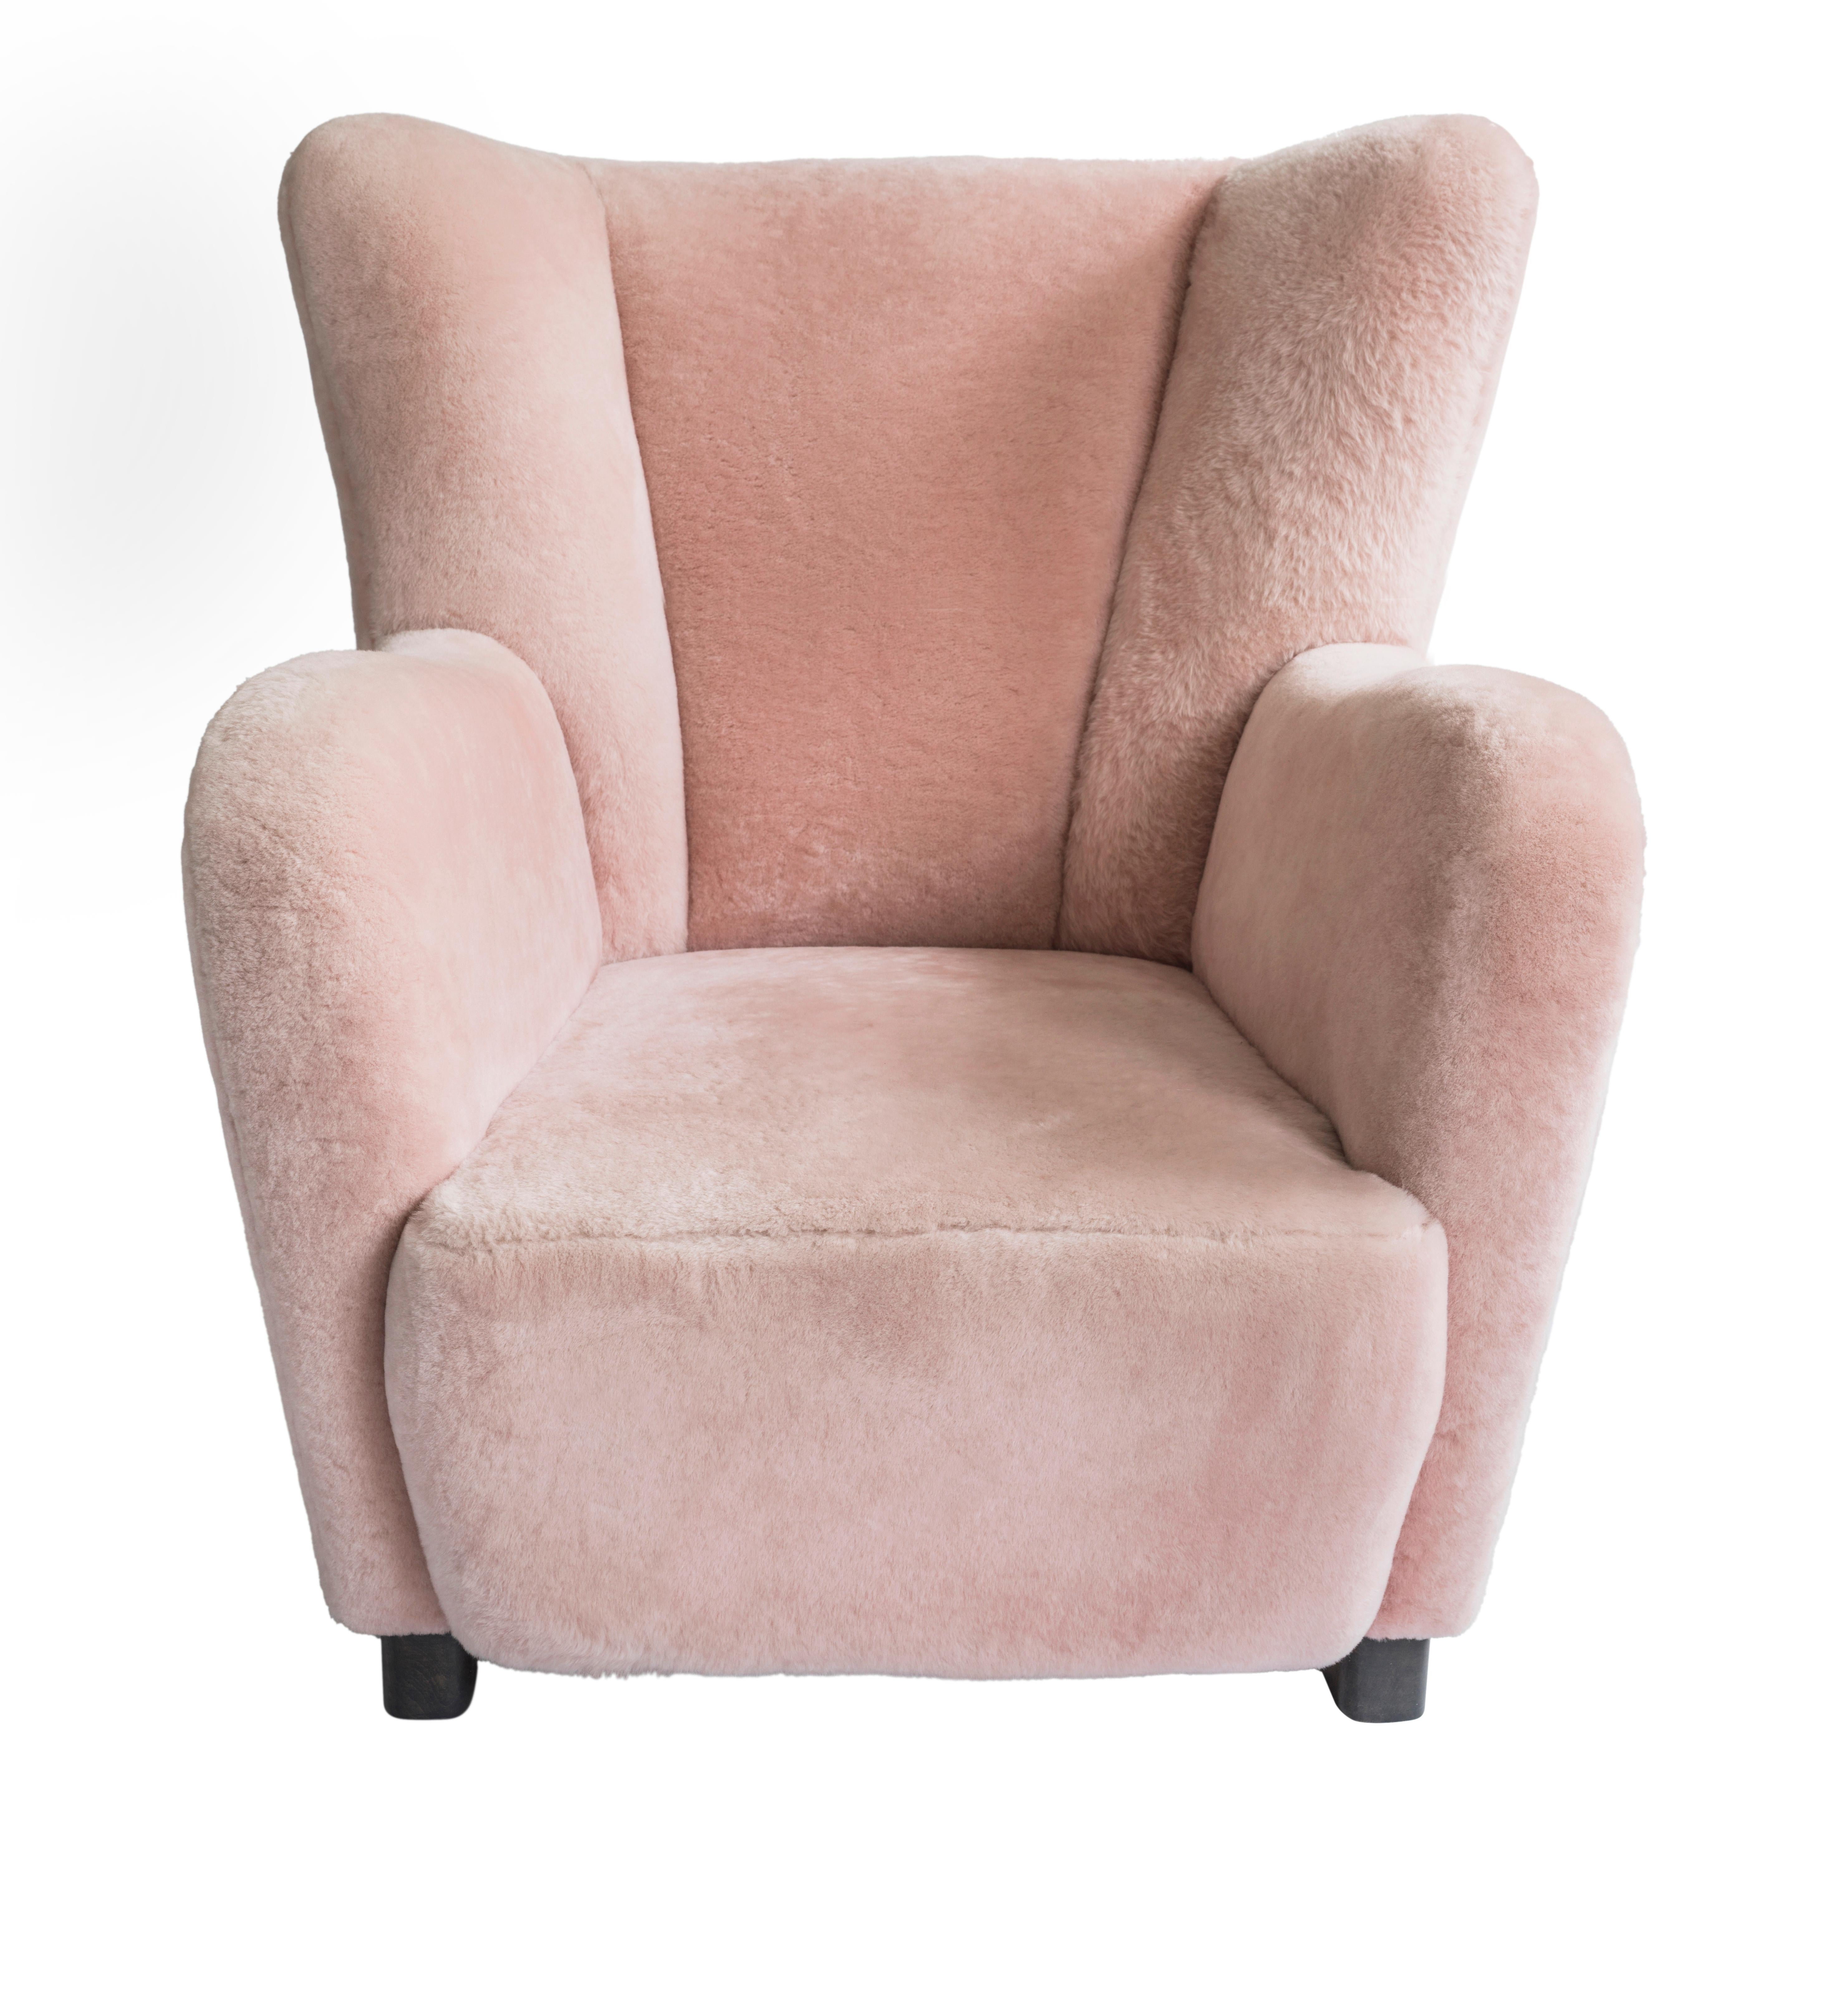 pink sheepskin chair